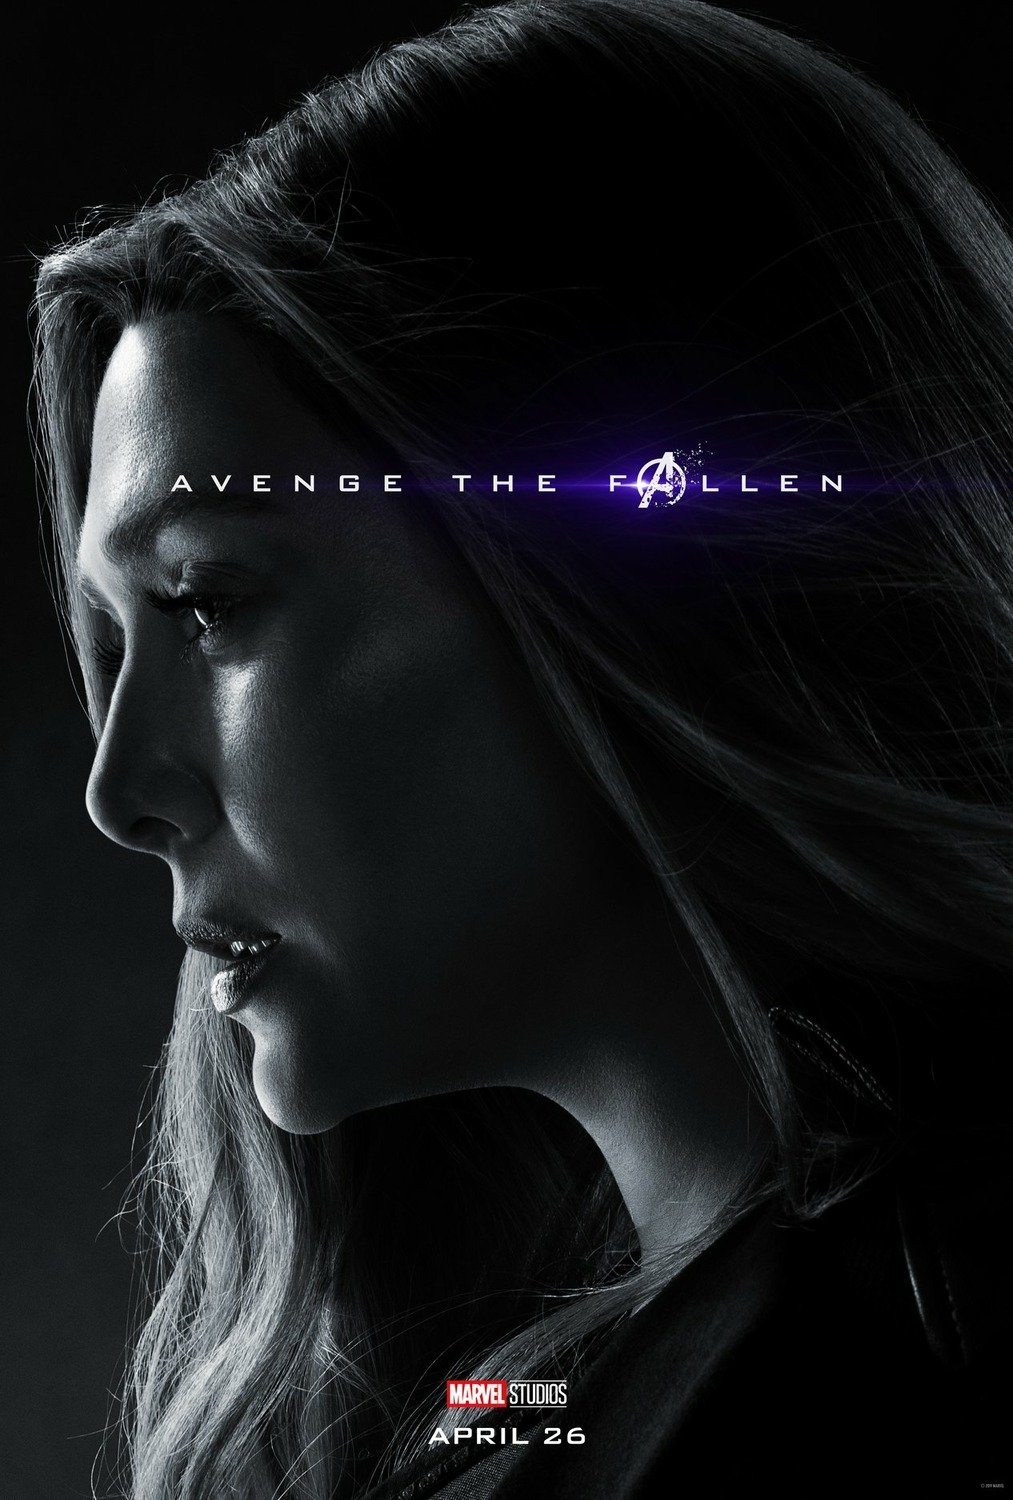 Poster du film Avengers: Endgame avec Scarlet Witch (Elizabeth Olsen)